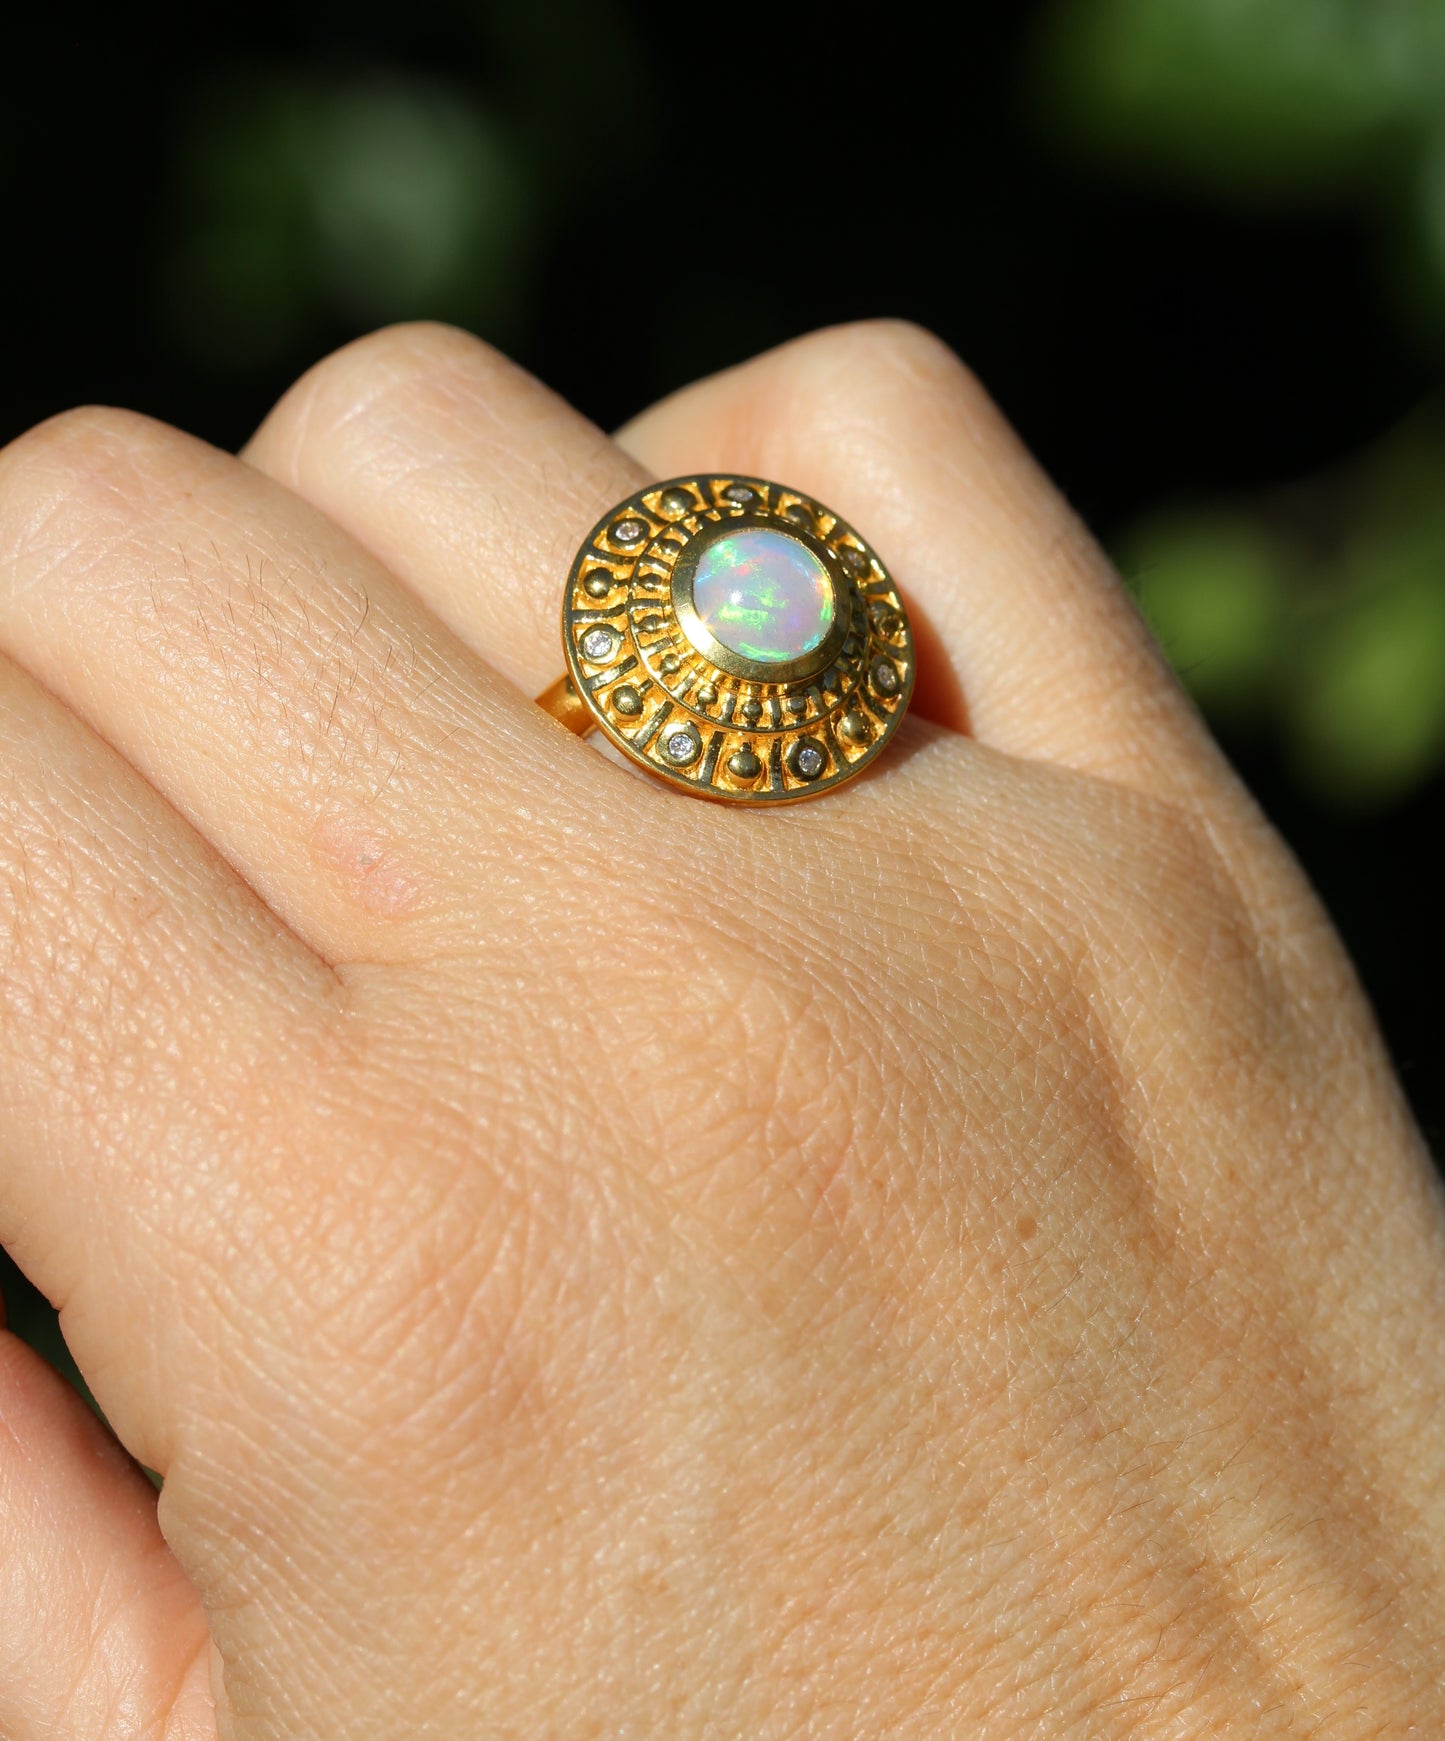 Natural Opal Medallion Ring - 24k Gold Plated - Adjustable Size #294